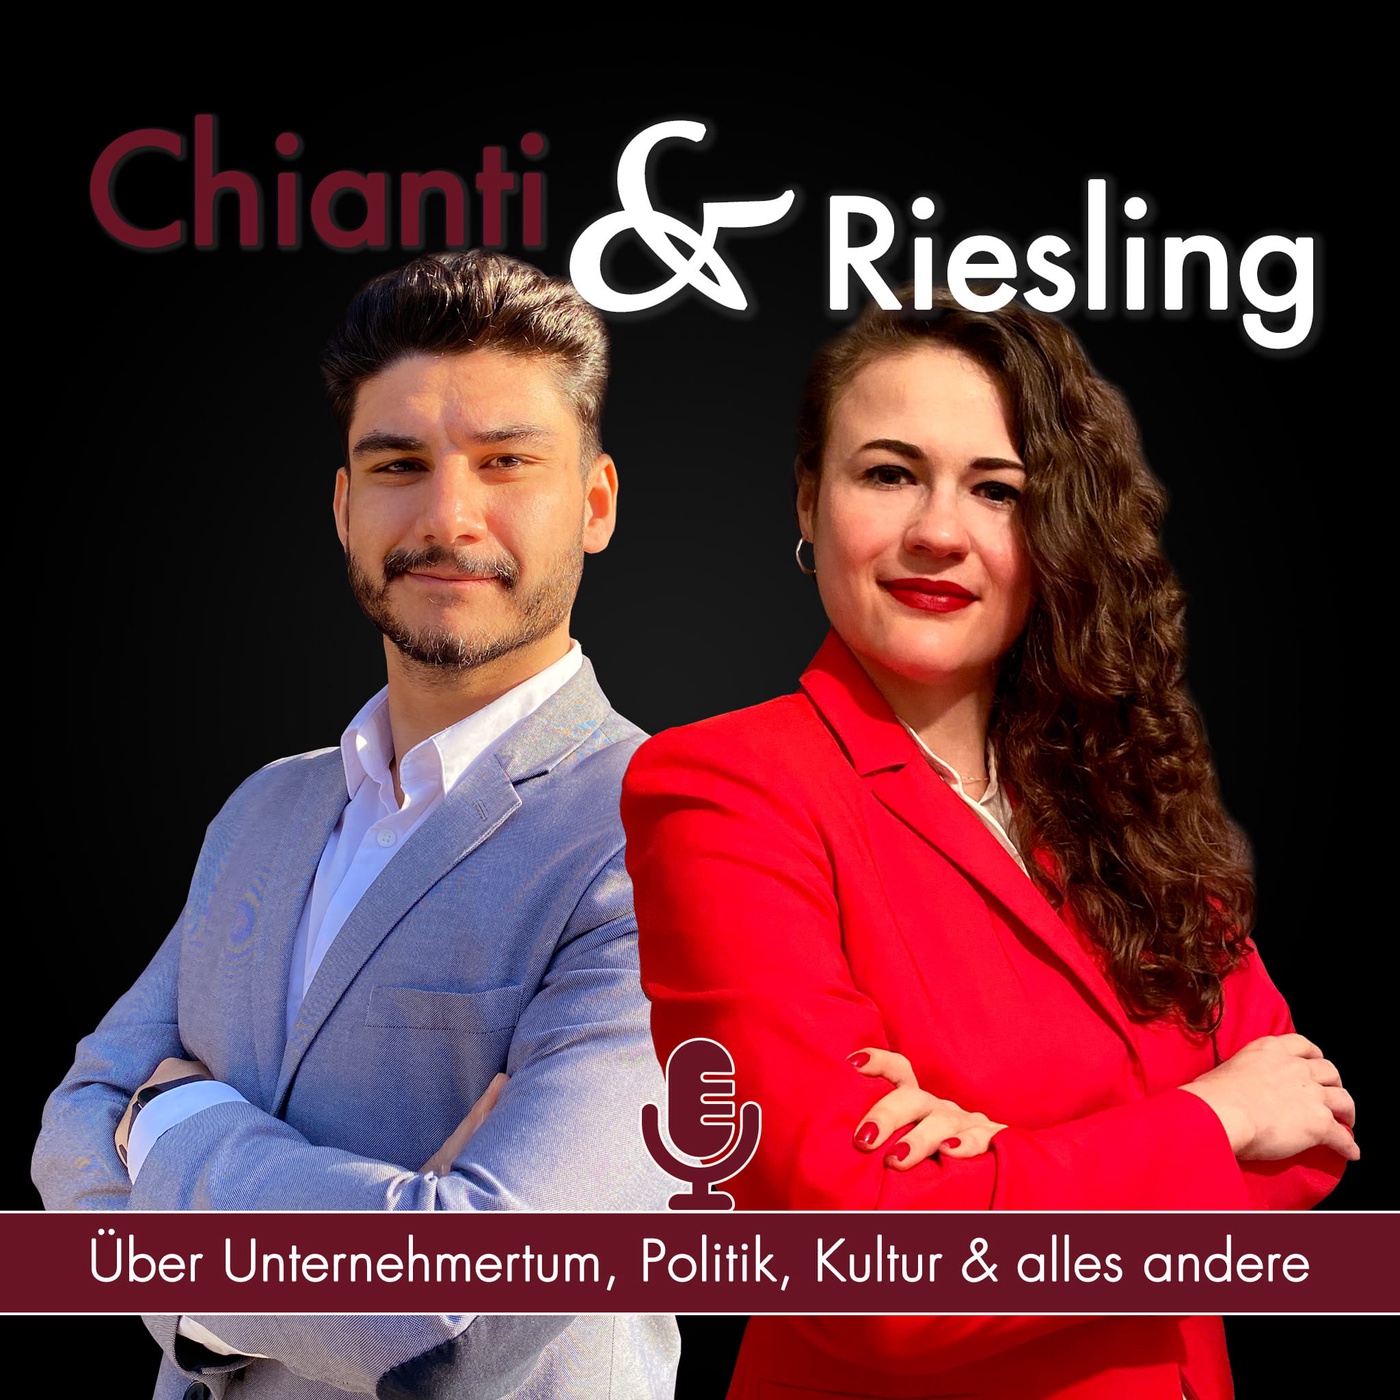 Chianti & Riesling